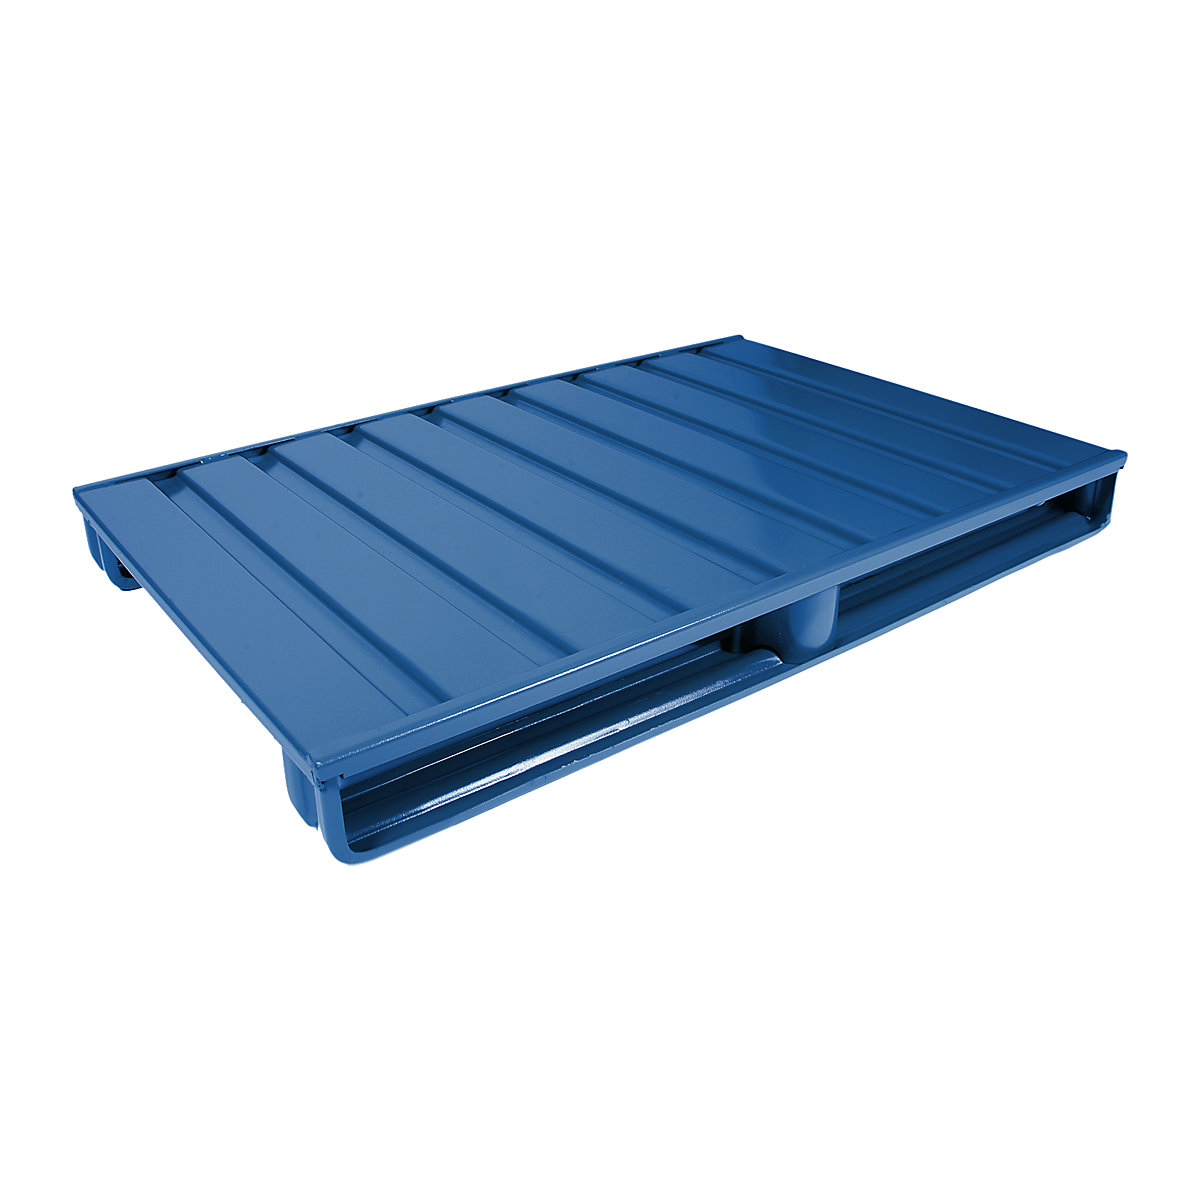 Palet plano de acero – Heson, L x A 1200 x 1000 mm, carga máx. 2000 kg, azul genciana-2